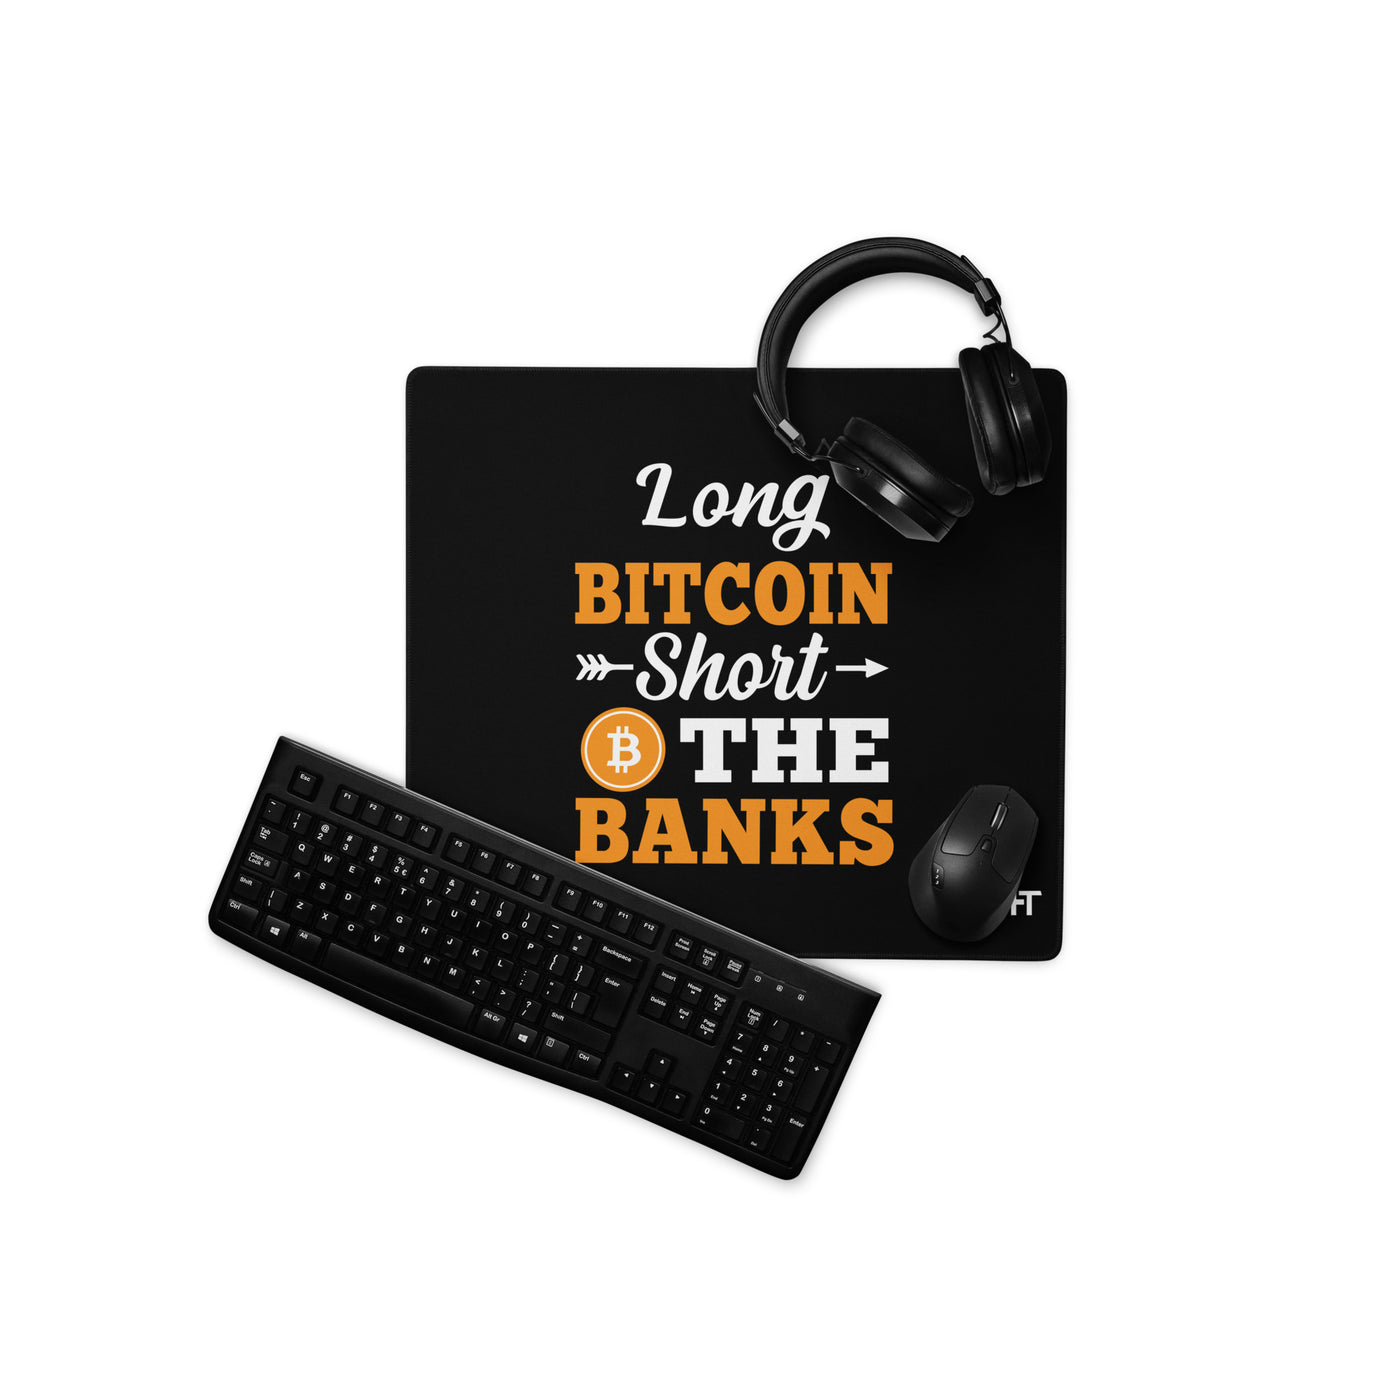 Long Big Coin, Short the Banks - Desk Mat